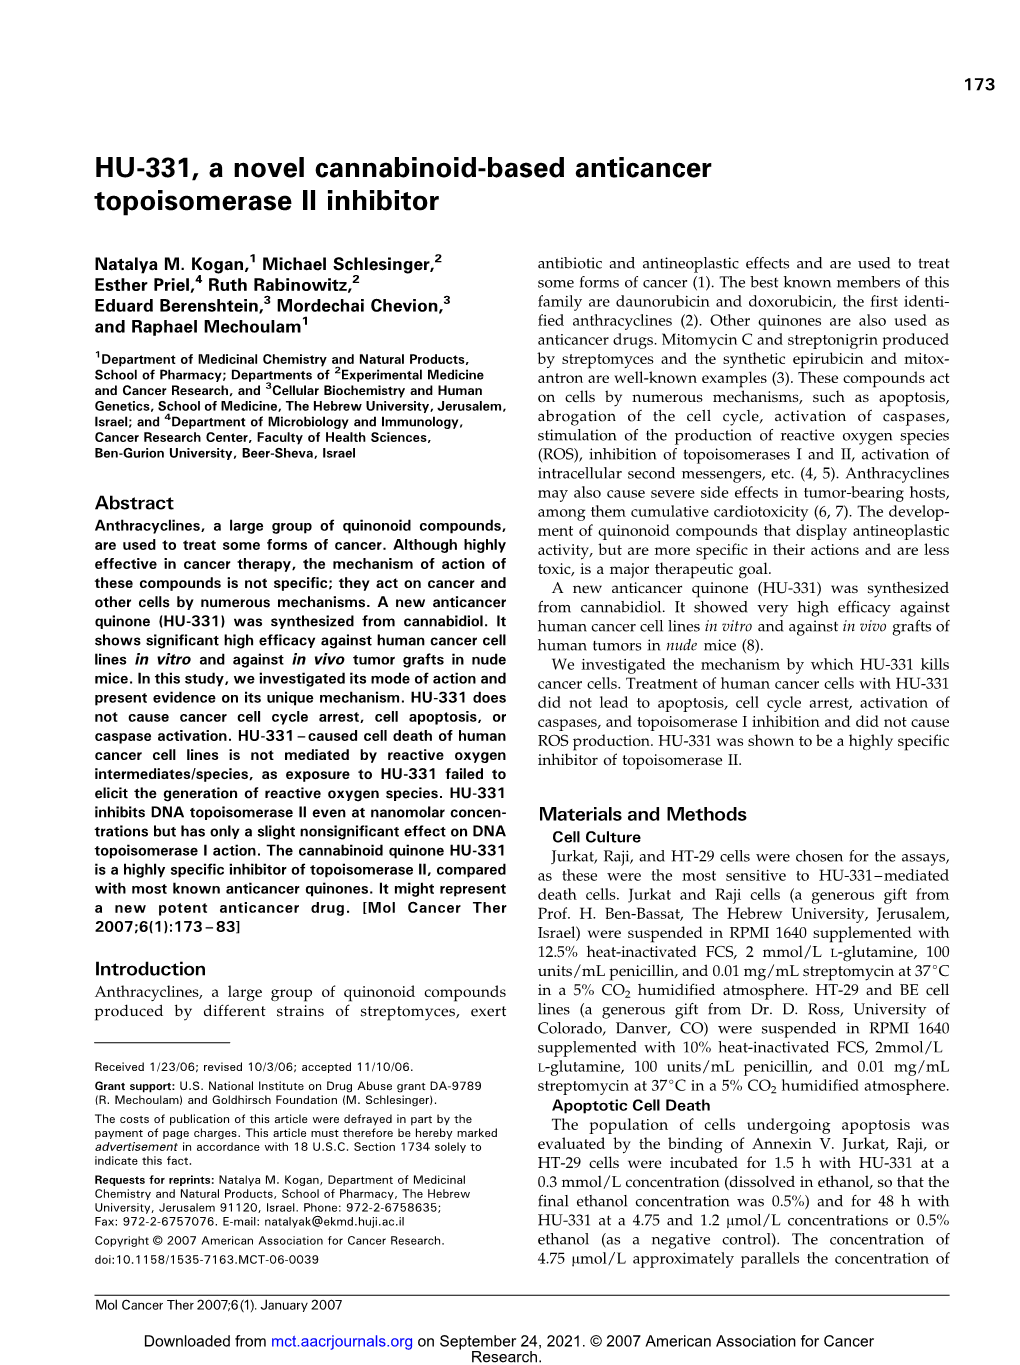 HU-331, a Novel Cannabinoid-Based Anticancer Topoisomerase II Inhibitor